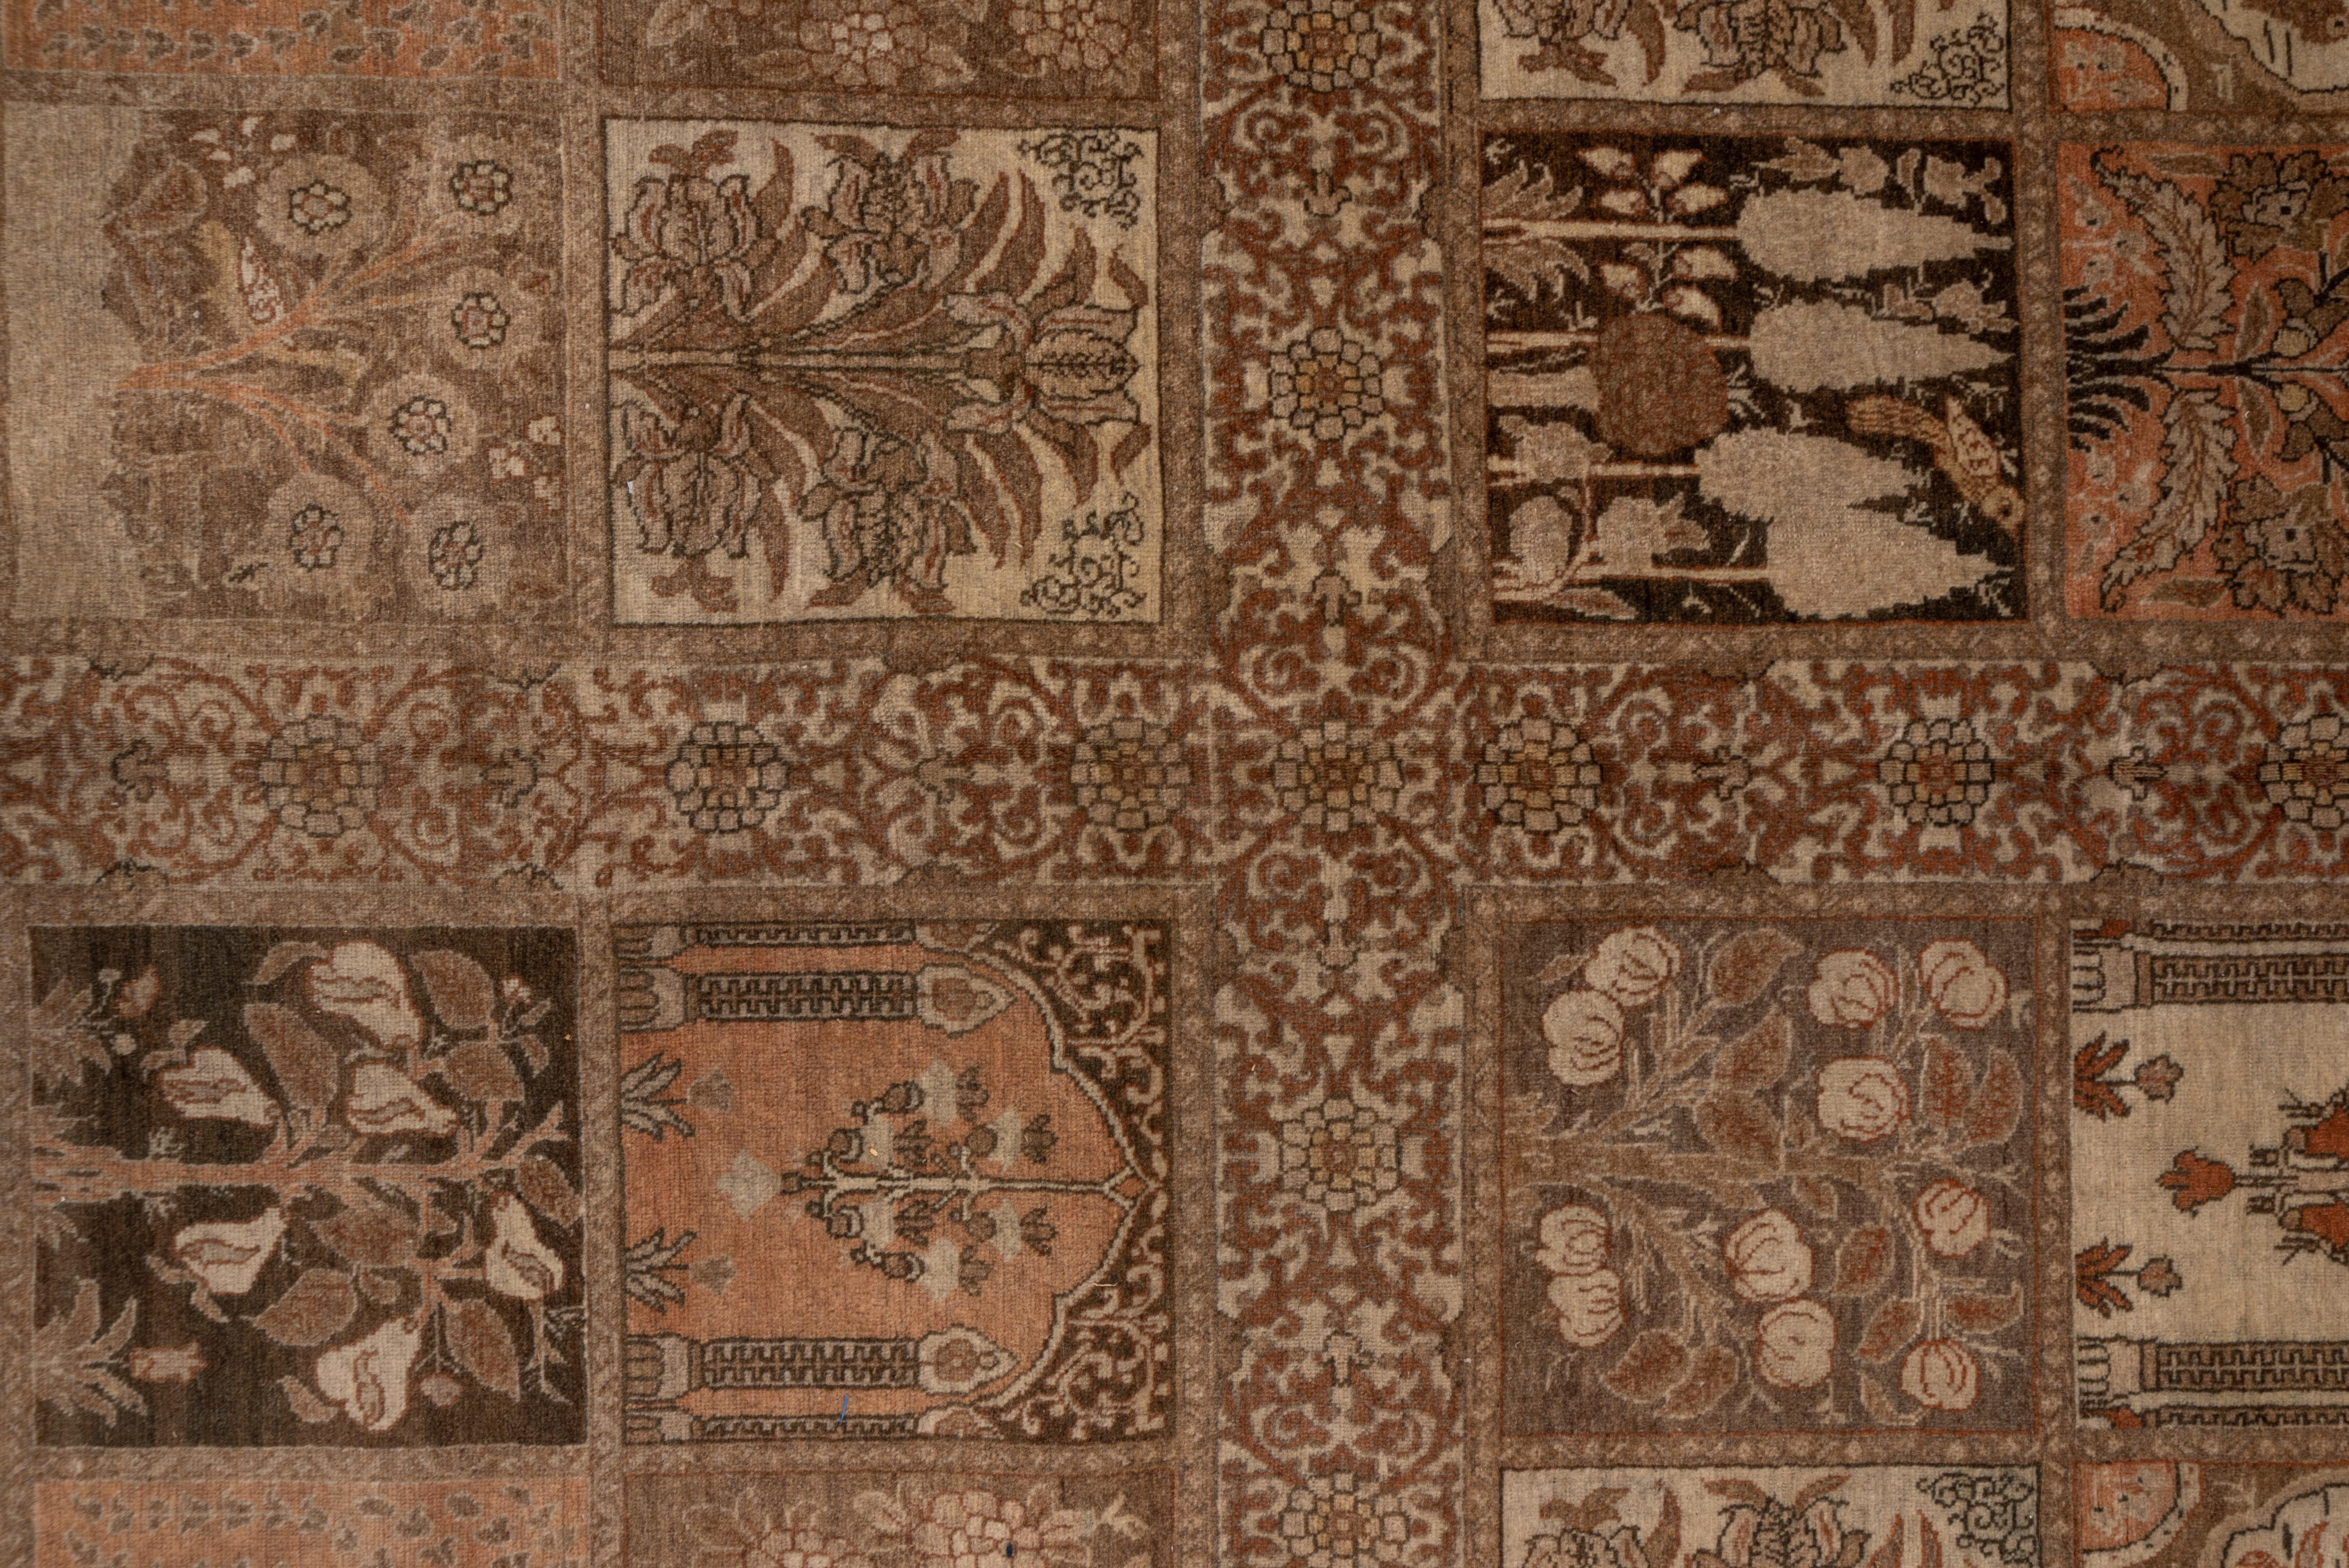 Rare Antique Persian Tabriz Carpet, circa 1900s In Good Condition For Sale In New York, NY